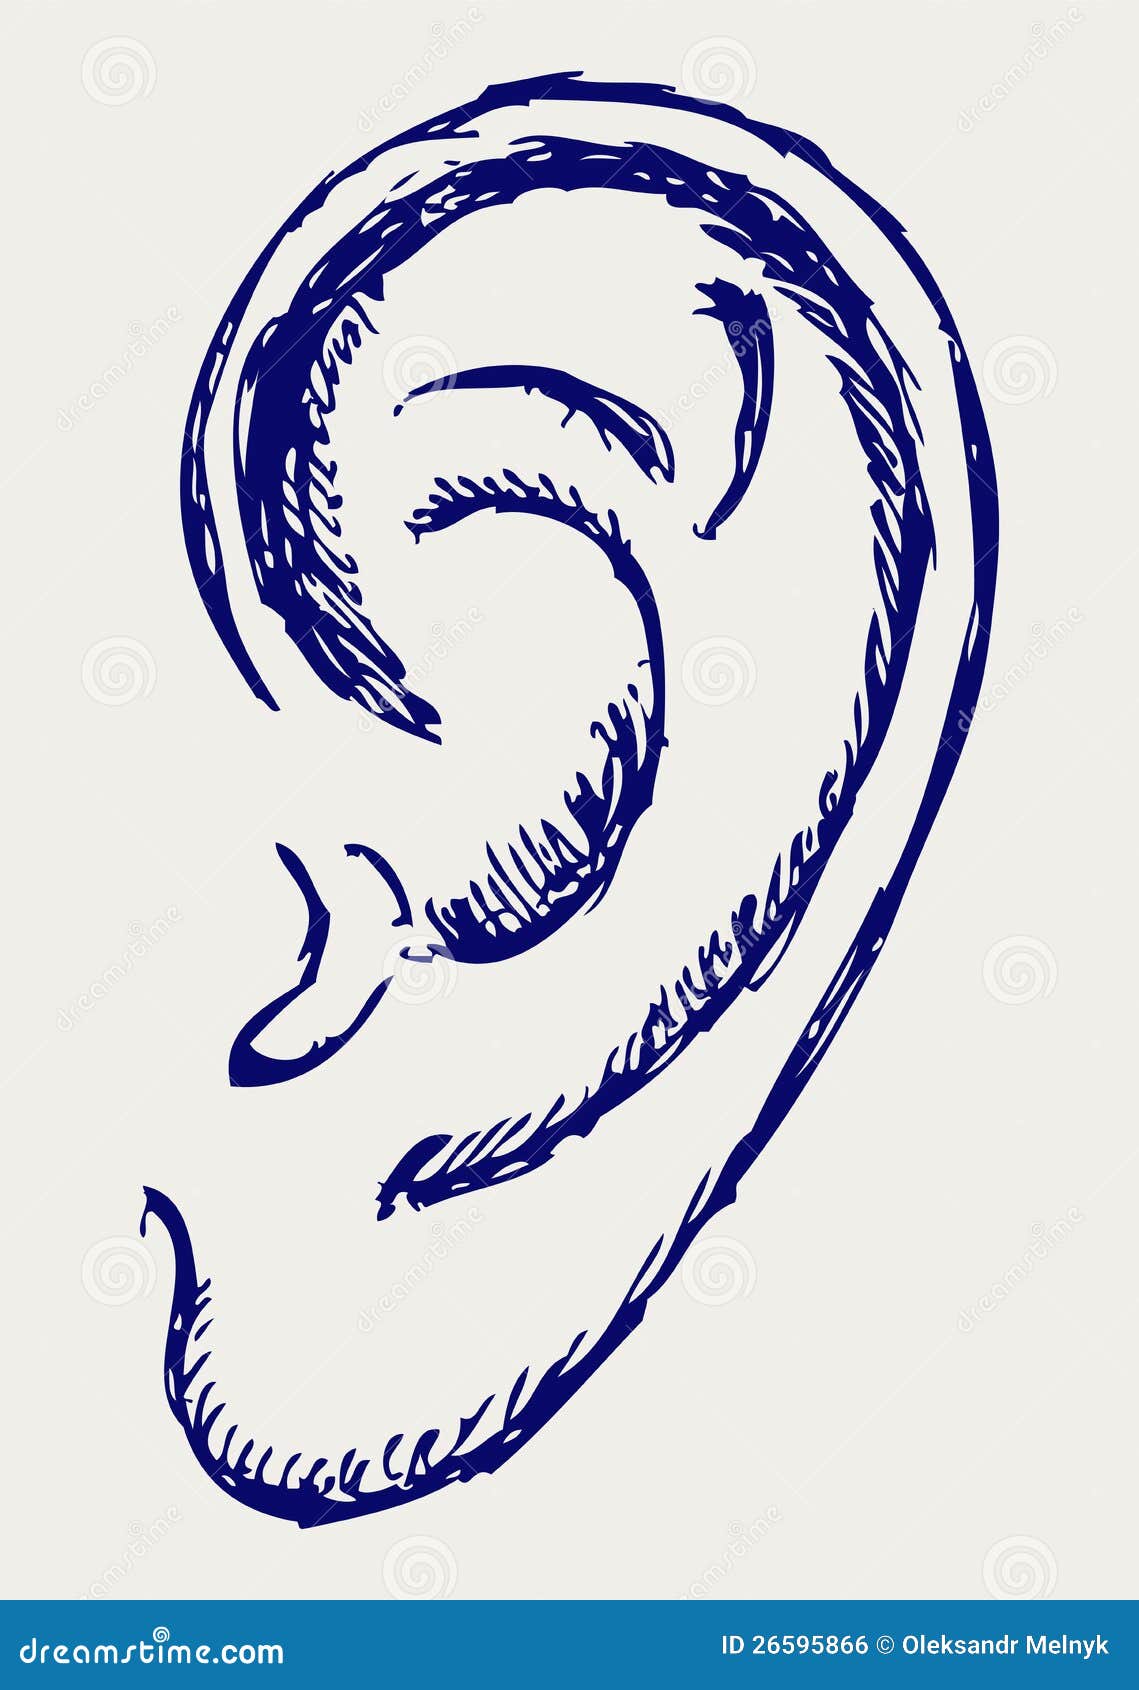 human ear clipart - photo #15